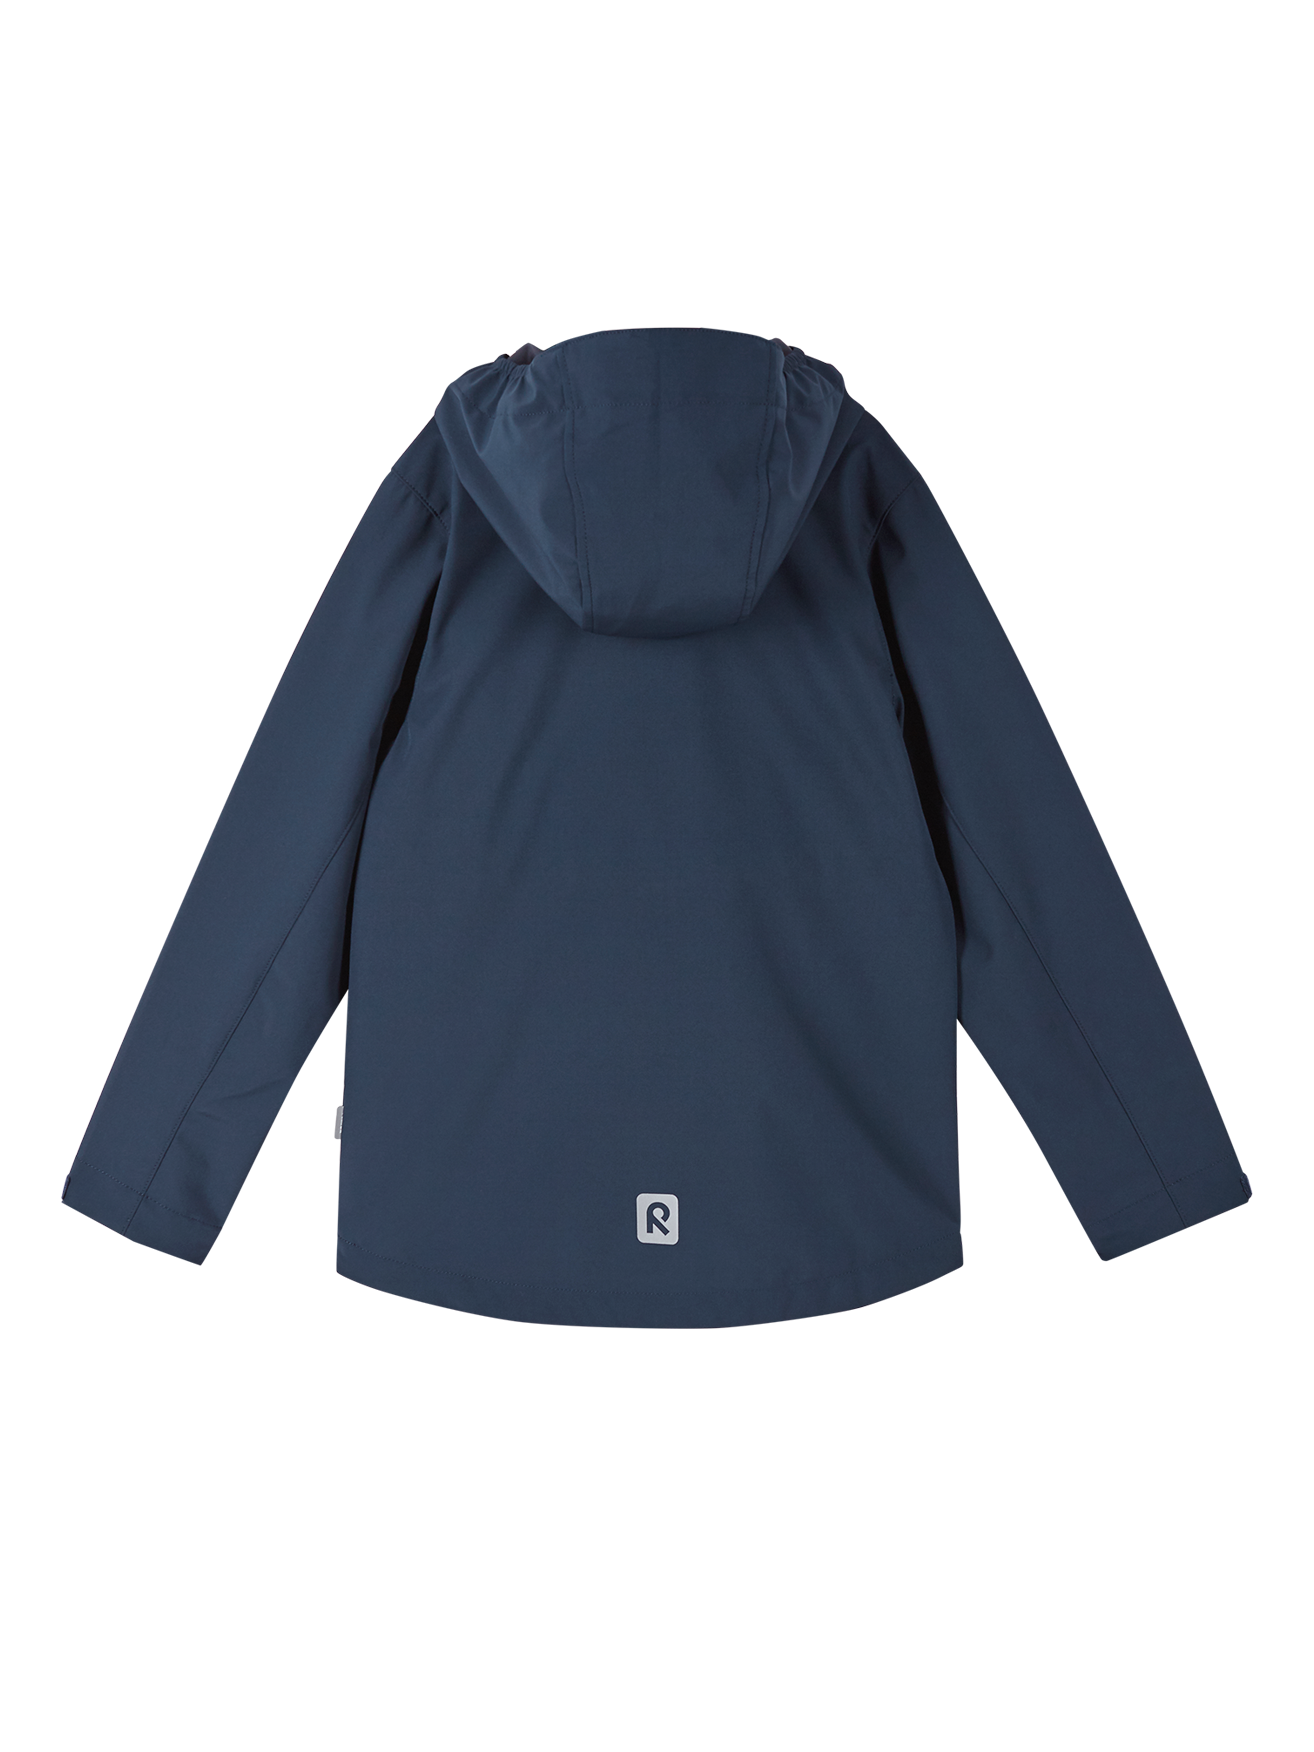 Kouvola - Children's shell jacket